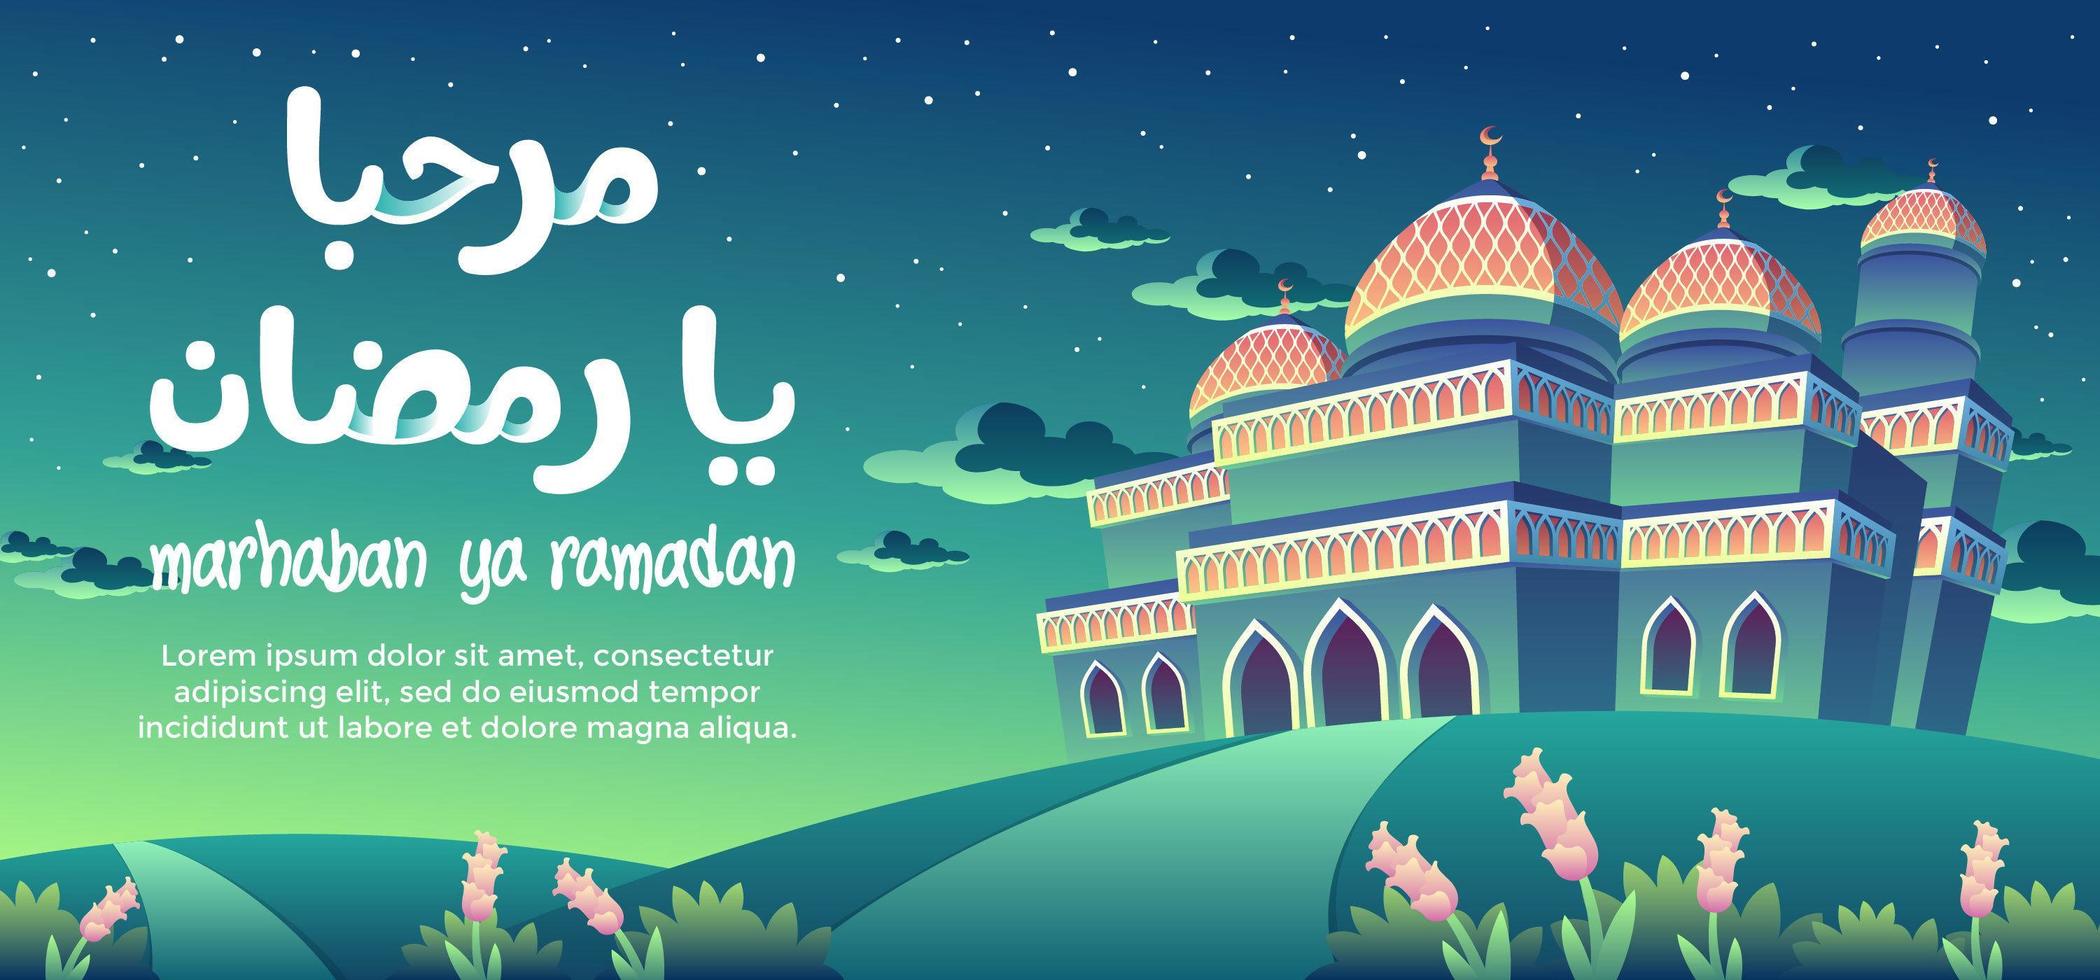 Marhaban Ya Ramadan com a mesquita verde padrão laranja à noite vetor